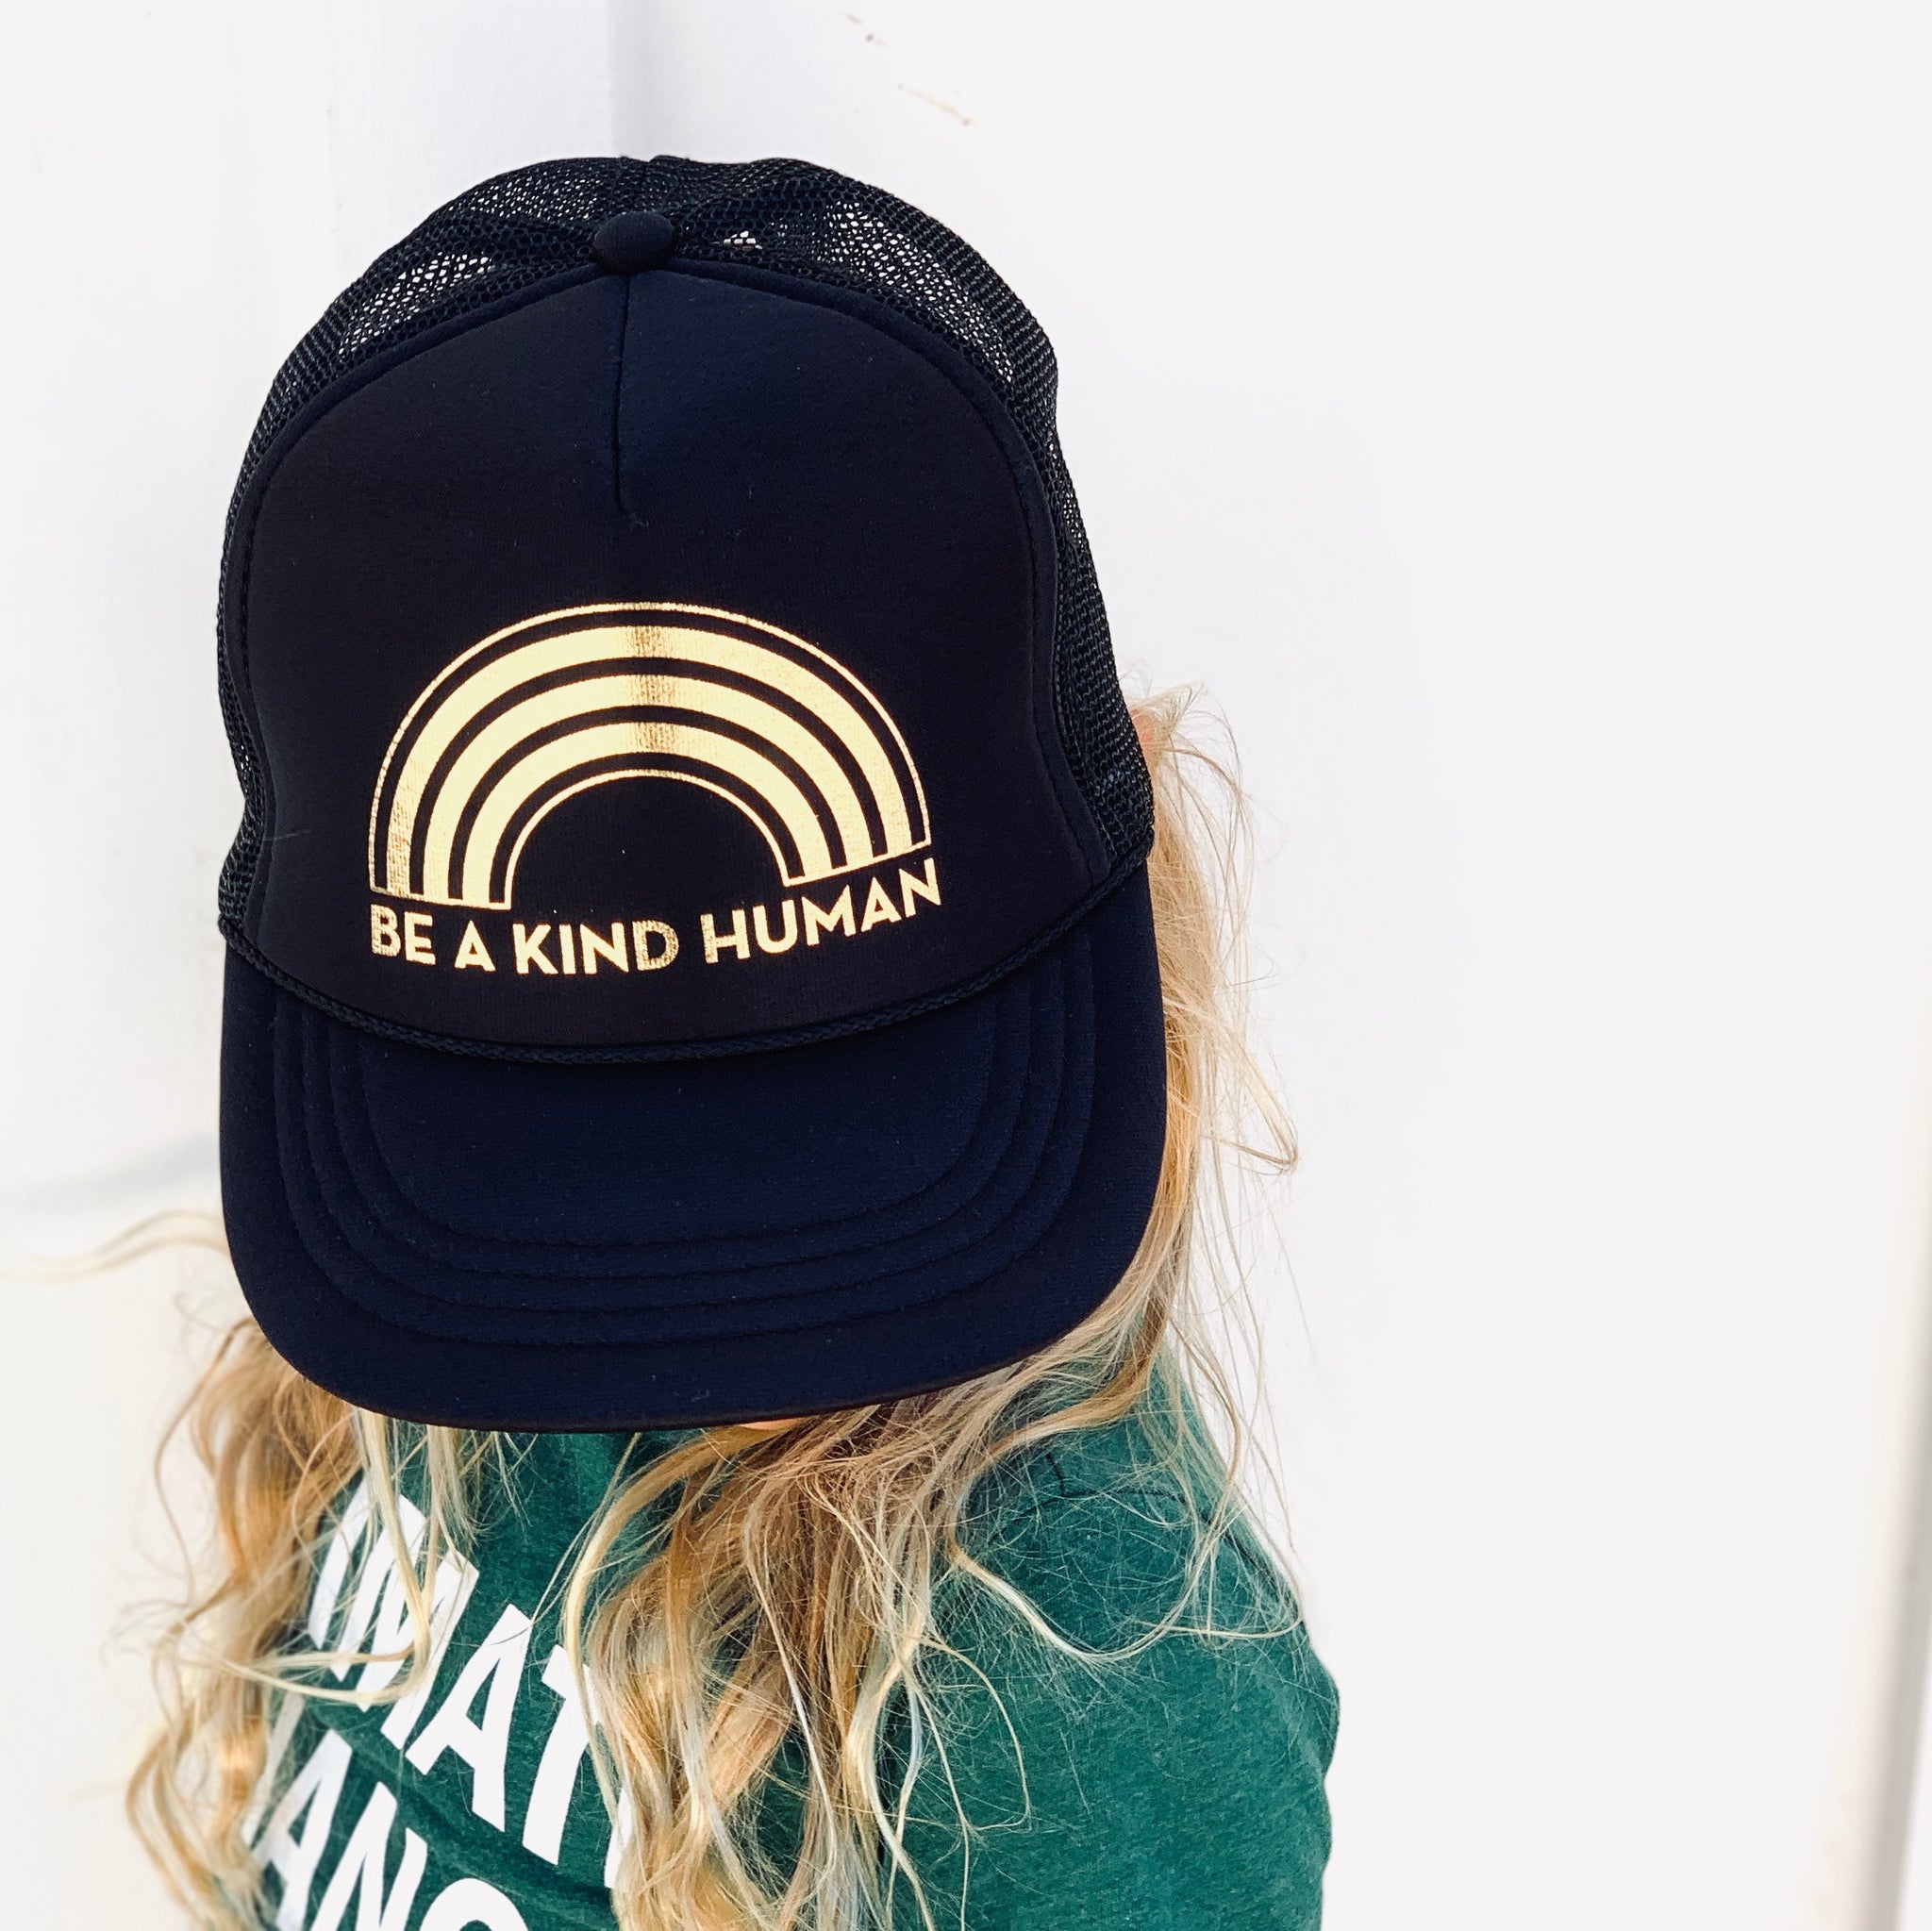 BE A KIND HUMAN TRUCKER HAT